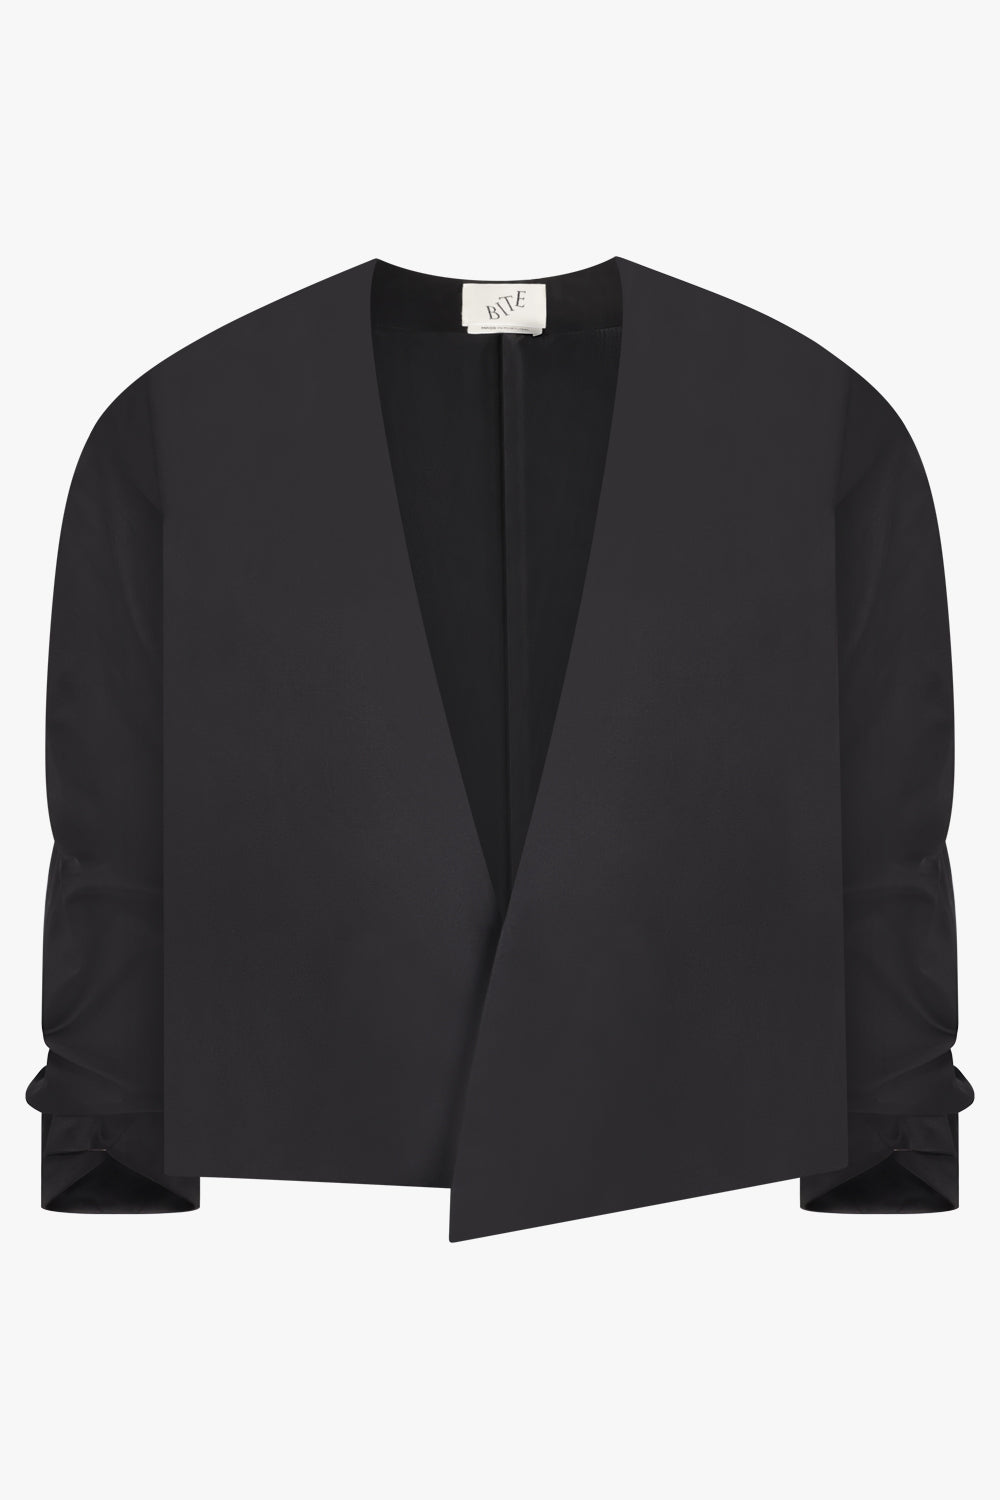 BITE STUDIOS RTW Crinkled Sleeve Jacket | Black